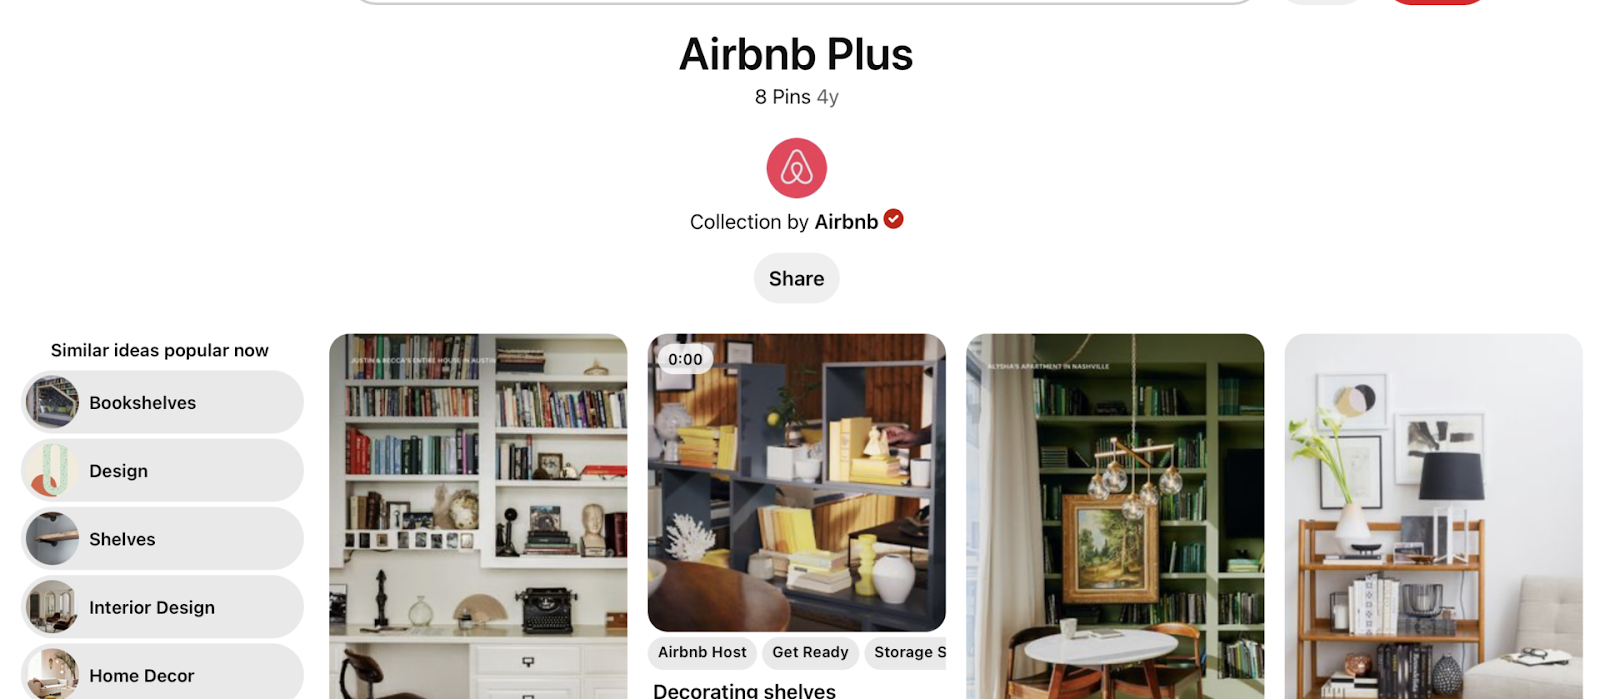 Airbnb Plus Pinterest page